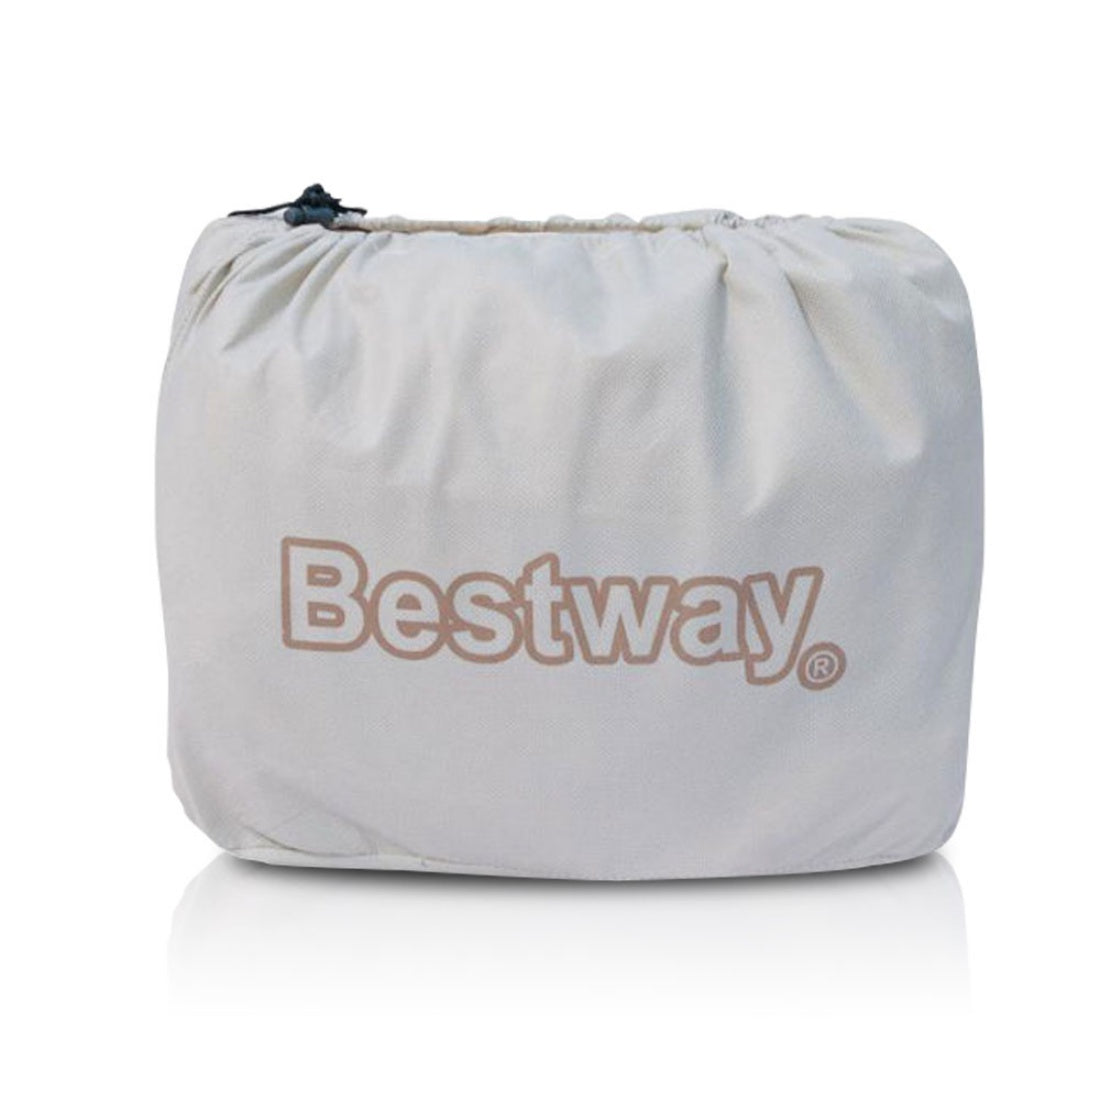 Bestway Comfort Quest Single Inflatable Mattress